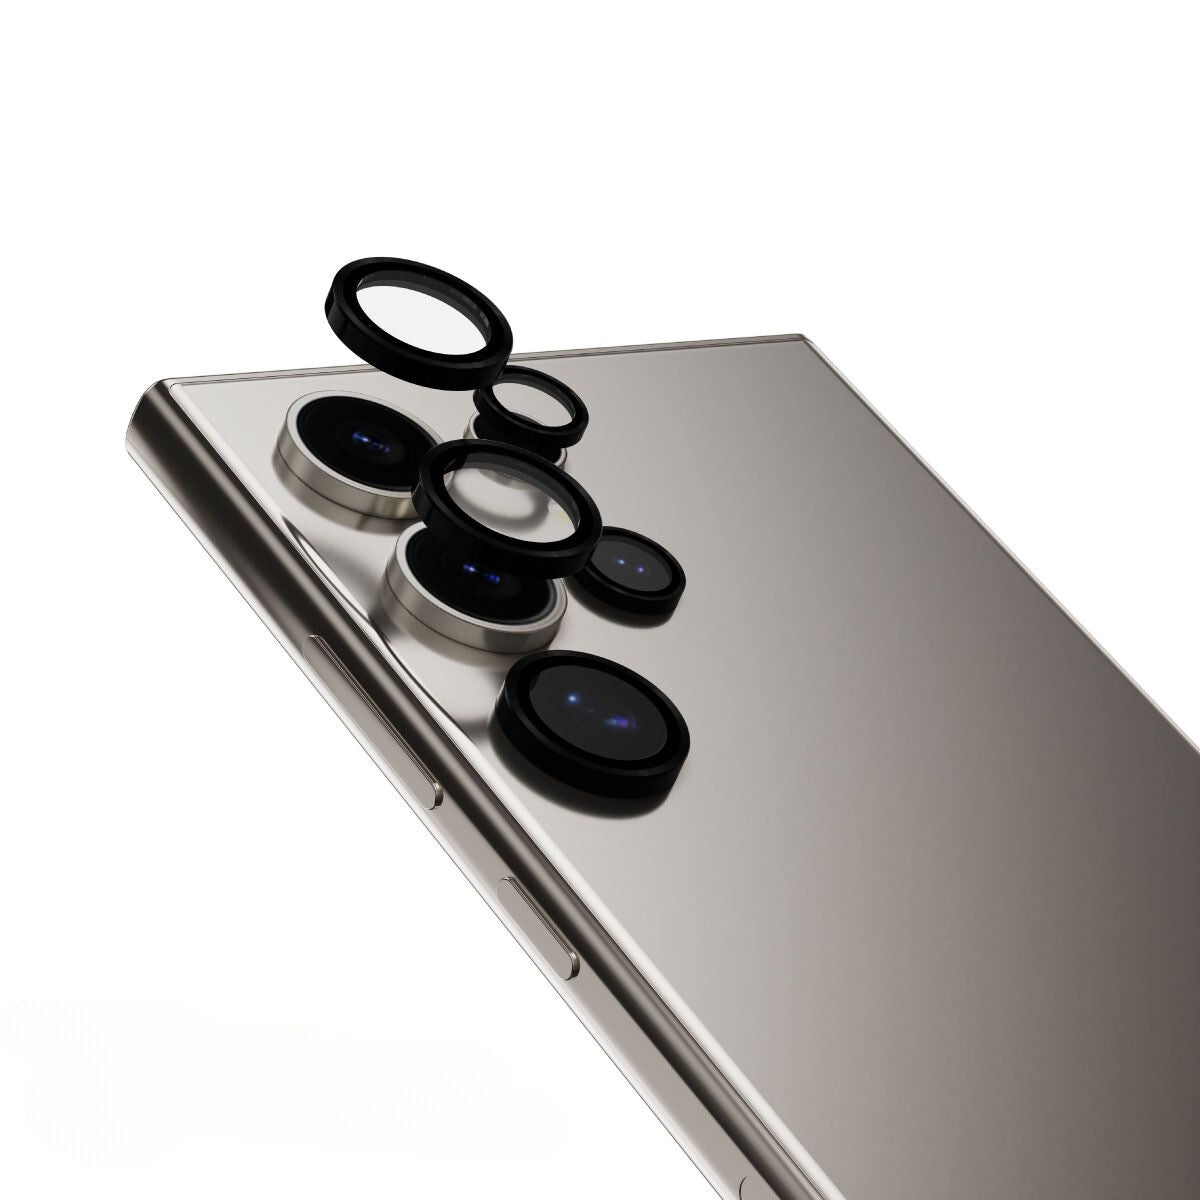 X.One® Camera Armor for Samsung Series